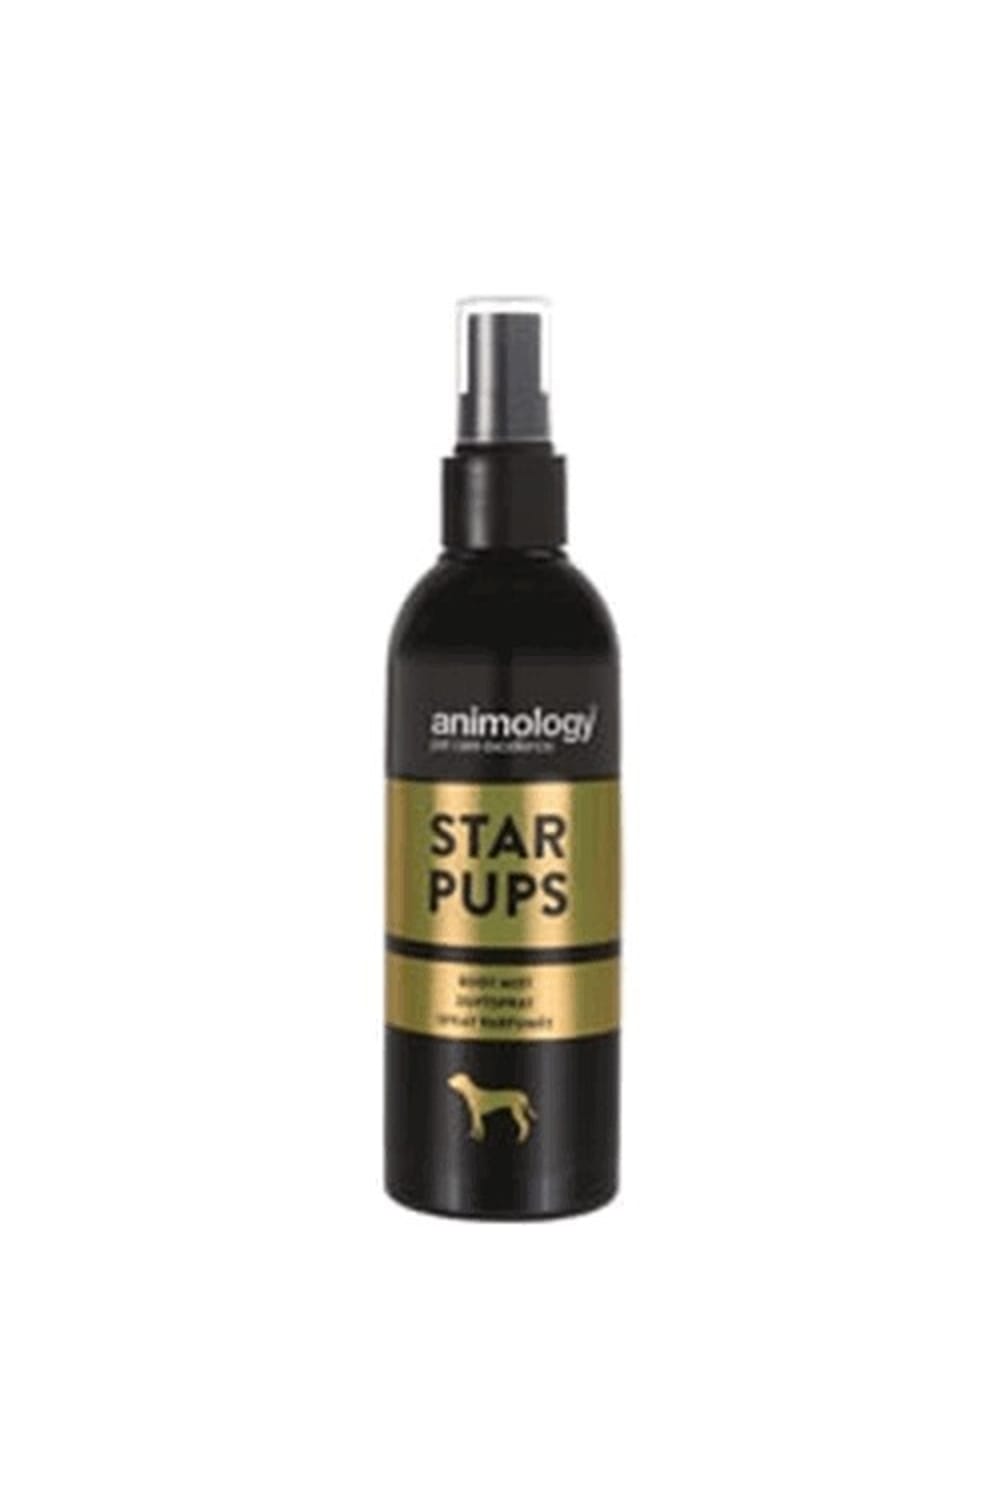 Animology Dog Liquid Star Pups Fragrance Body Mist (May Vary) (5 fl oz)